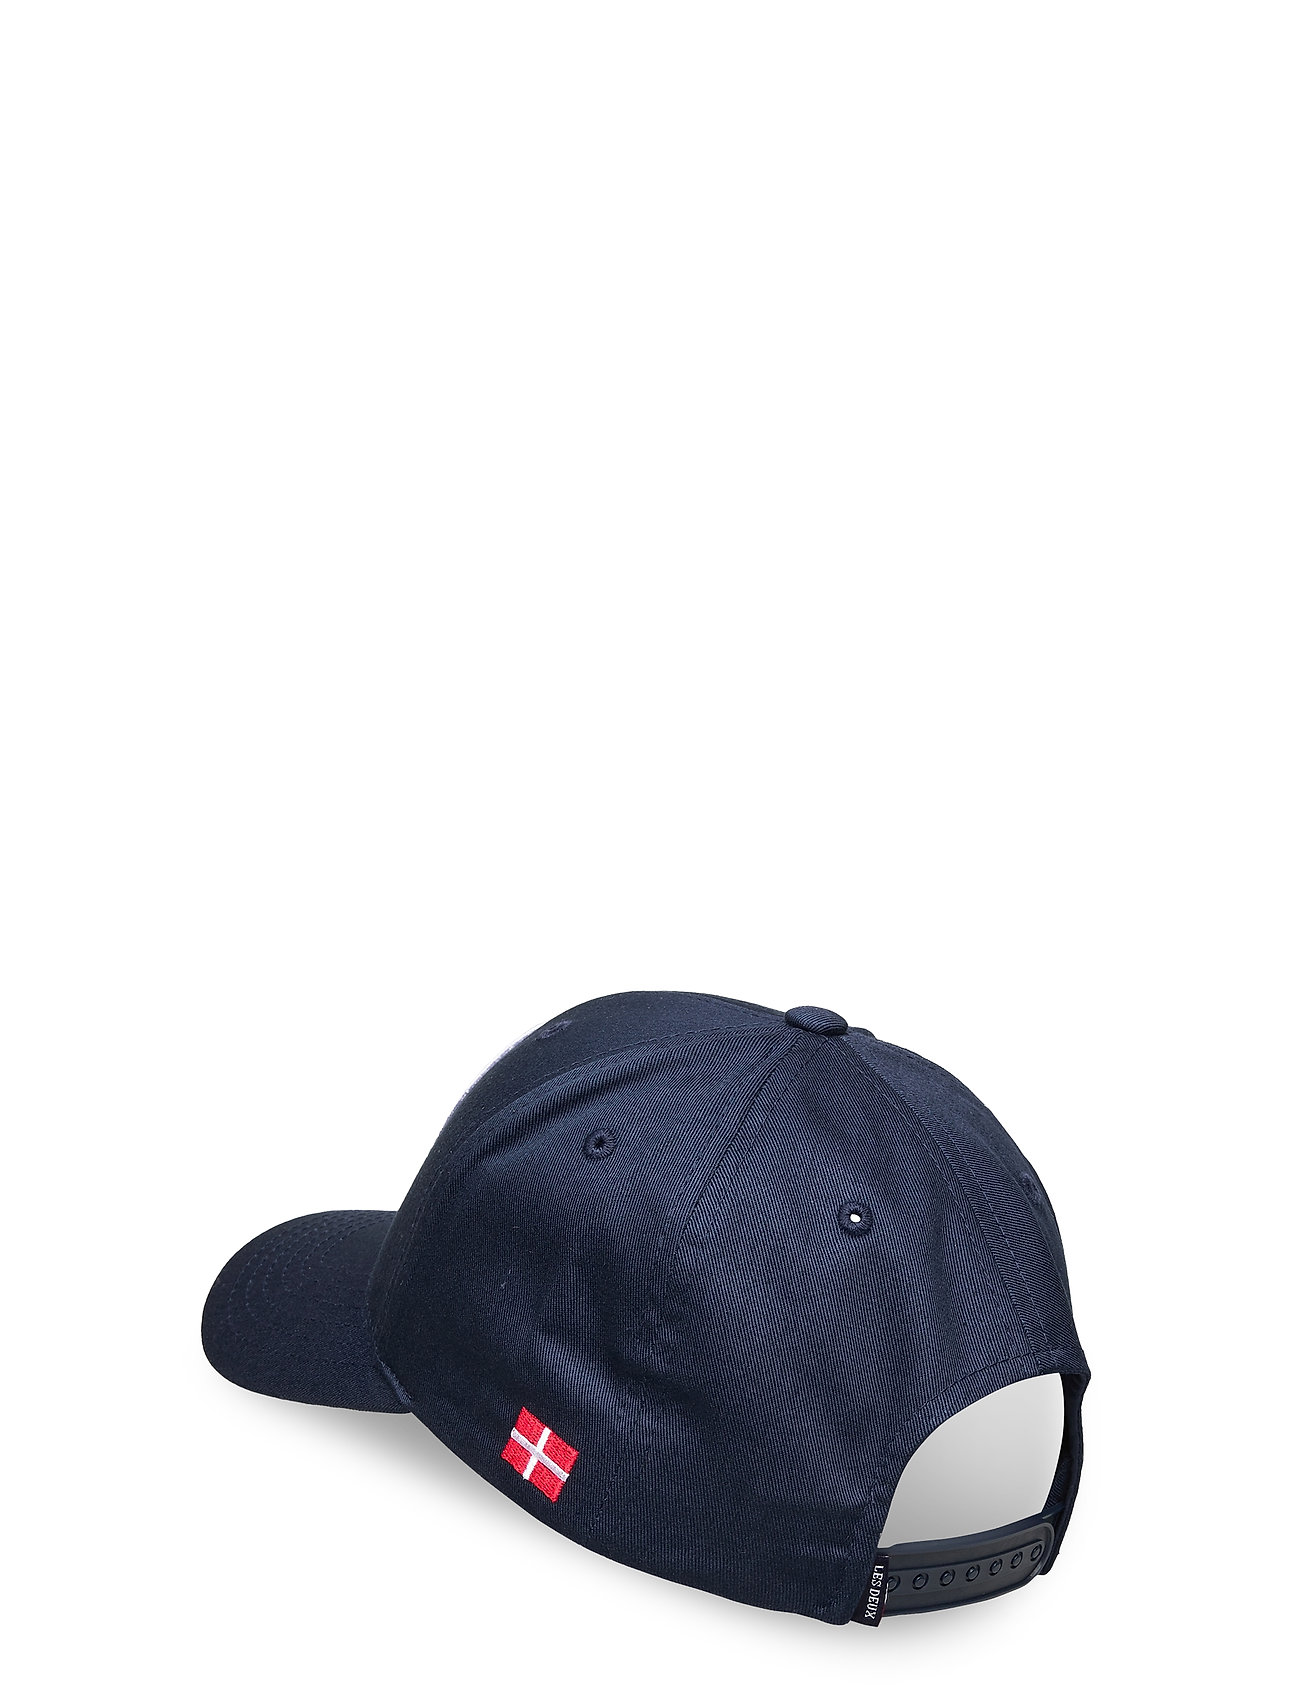 Dbu Baseball Cap Accessories Headwear Caps Blå Les Deux